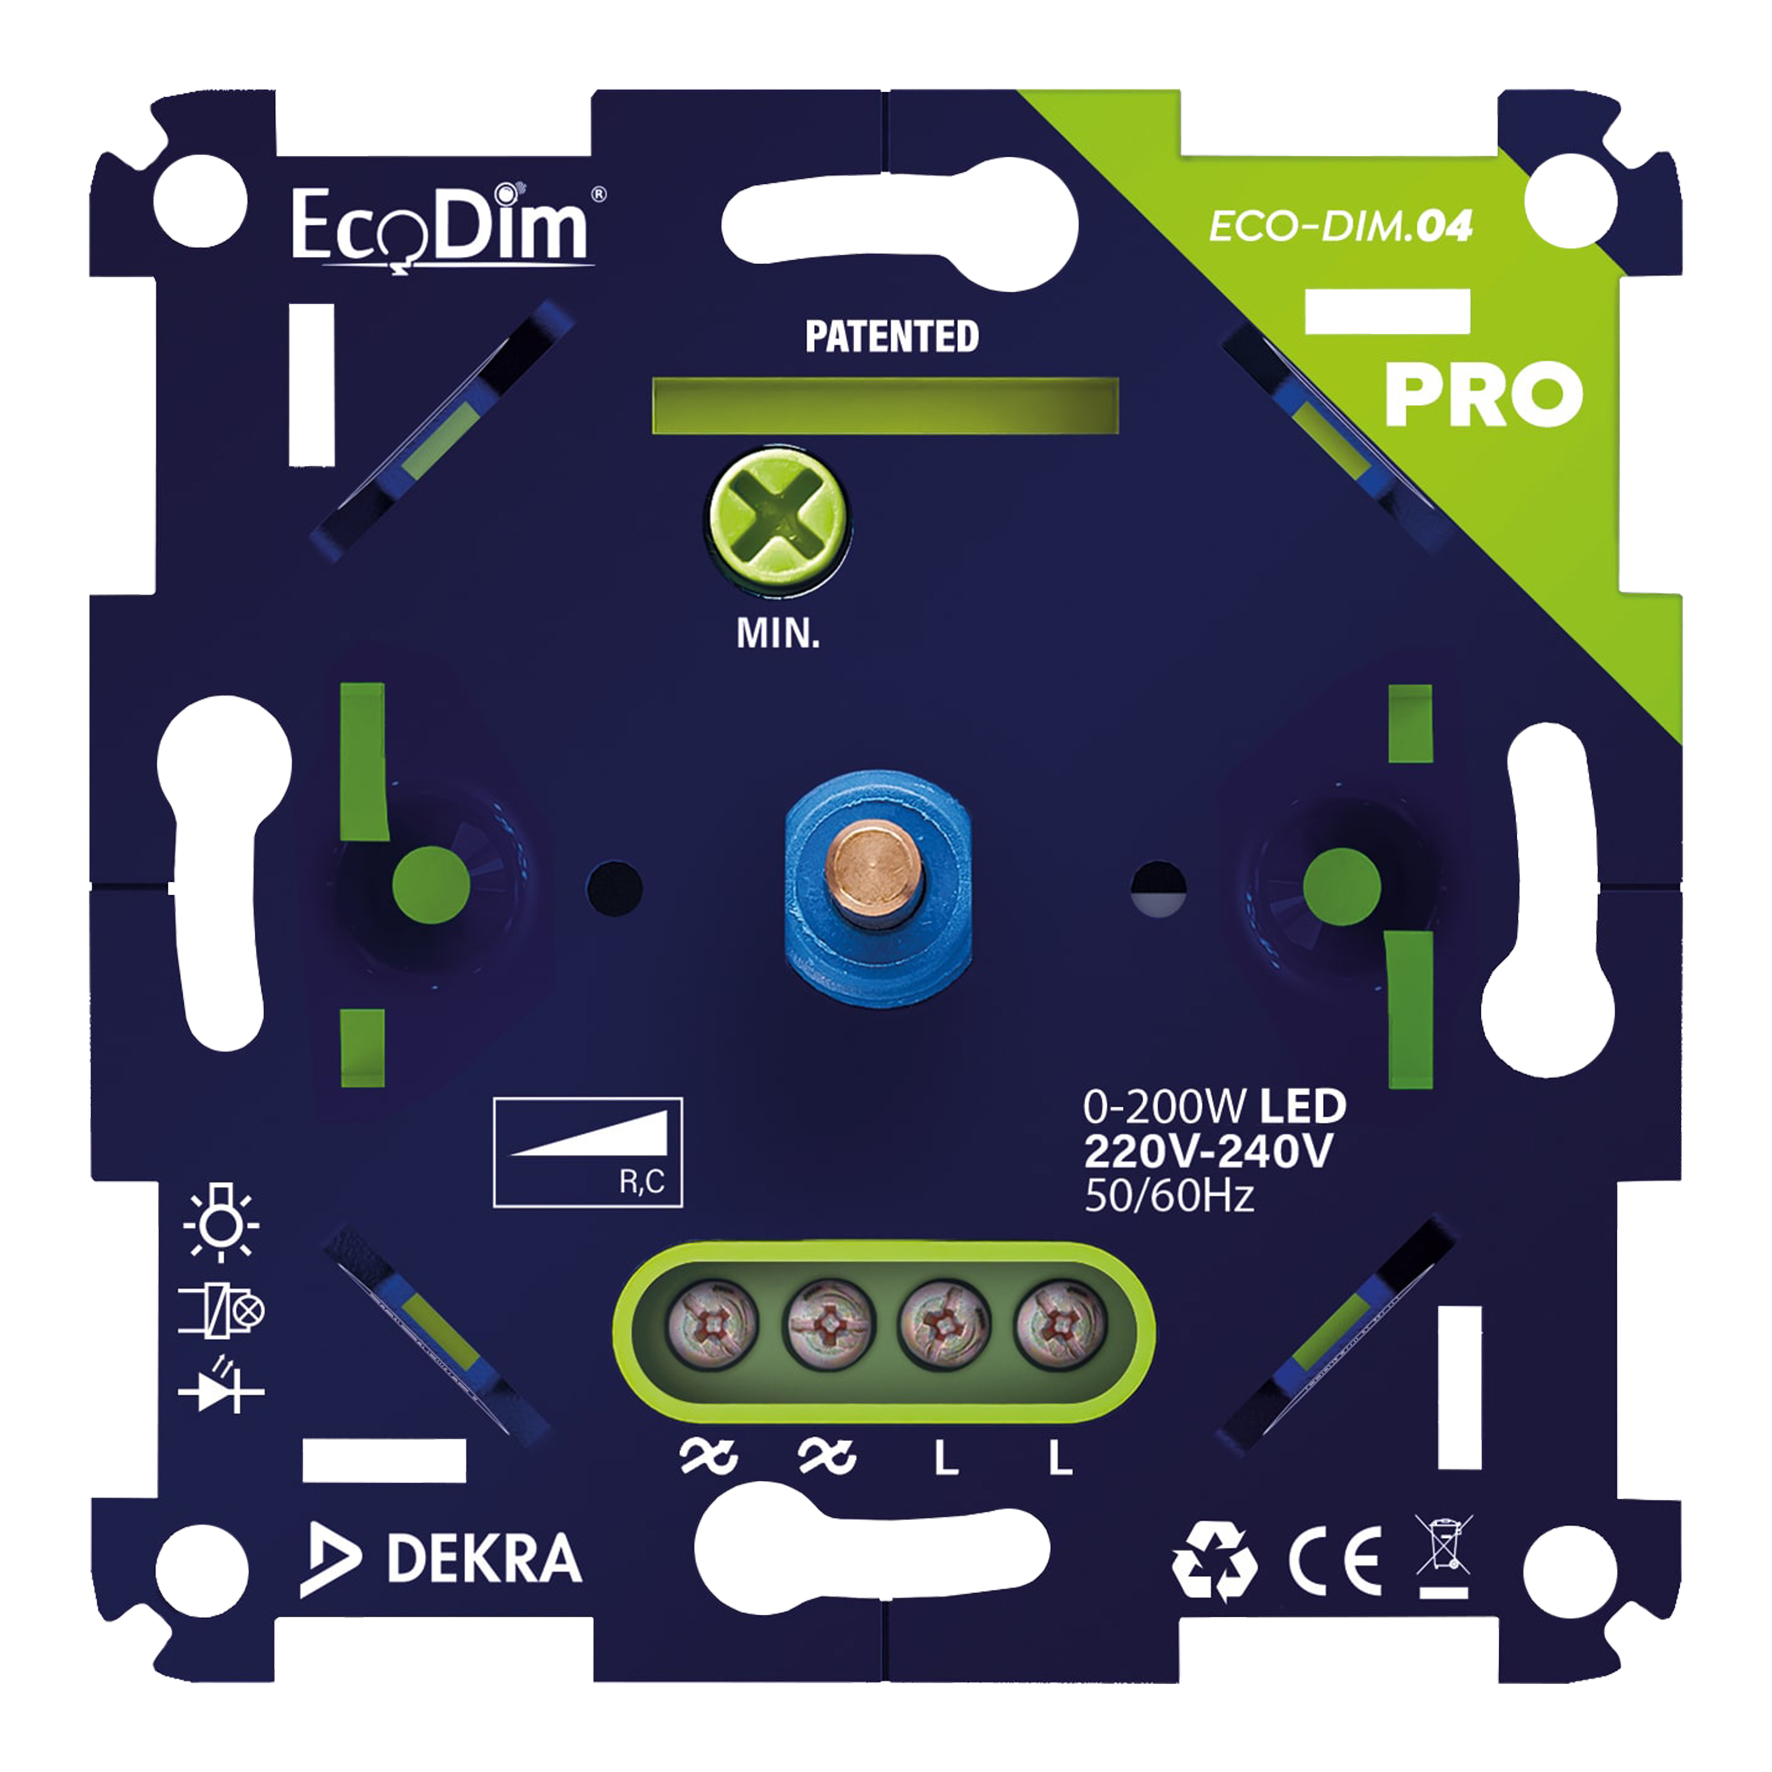 EcoDim ECO-DIM.04 PRO LED Dimmer 0-200W Phase Cut (RC)